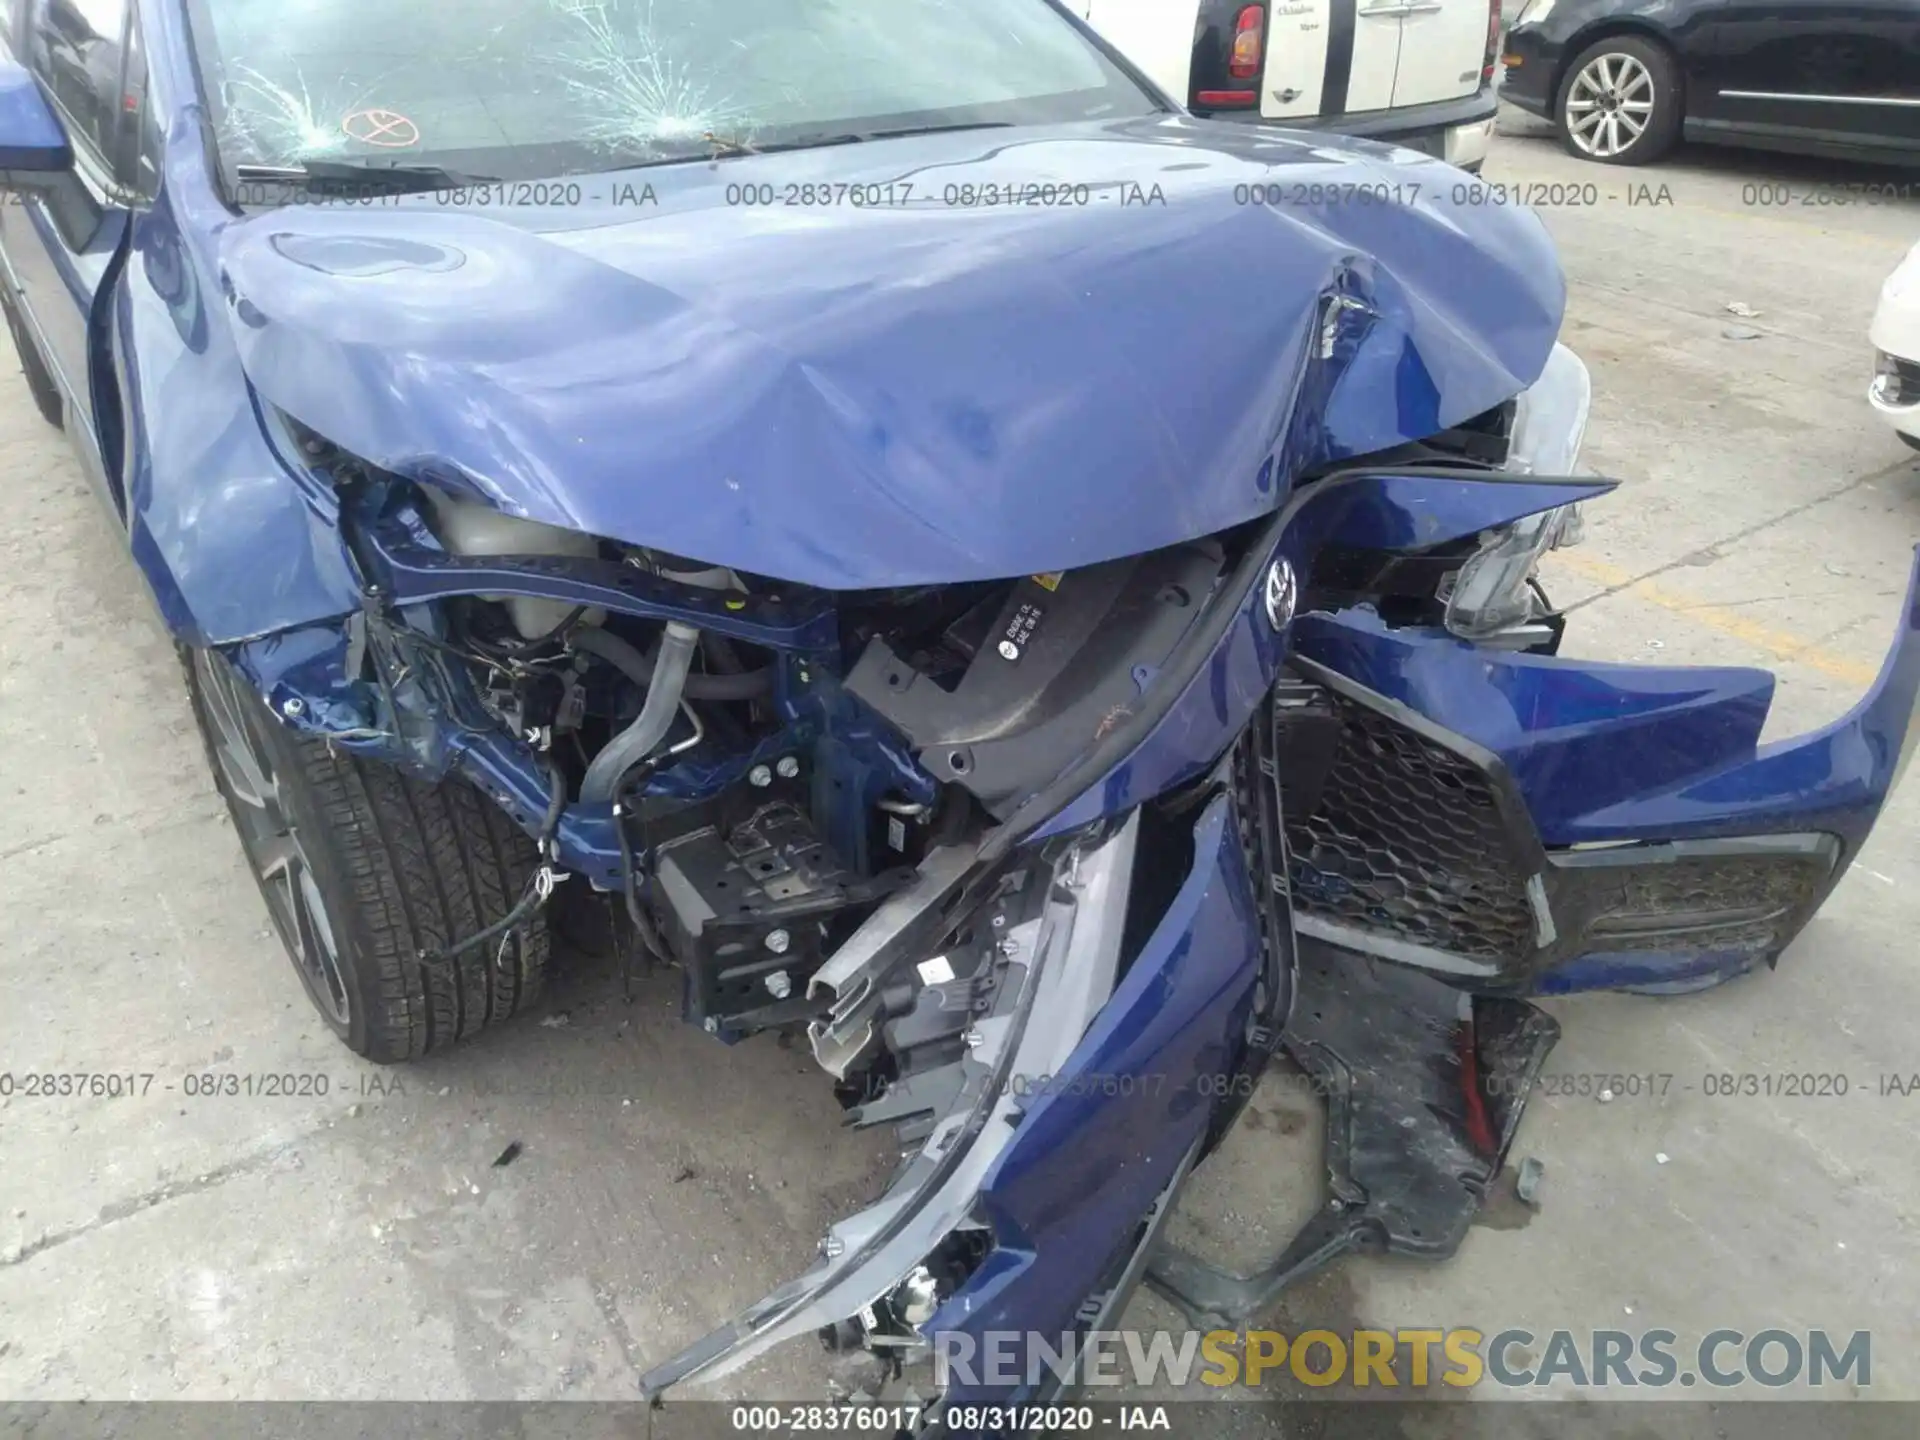 6 Photograph of a damaged car JTDS4RCEXLJ005505 TOYOTA COROLLA 2020